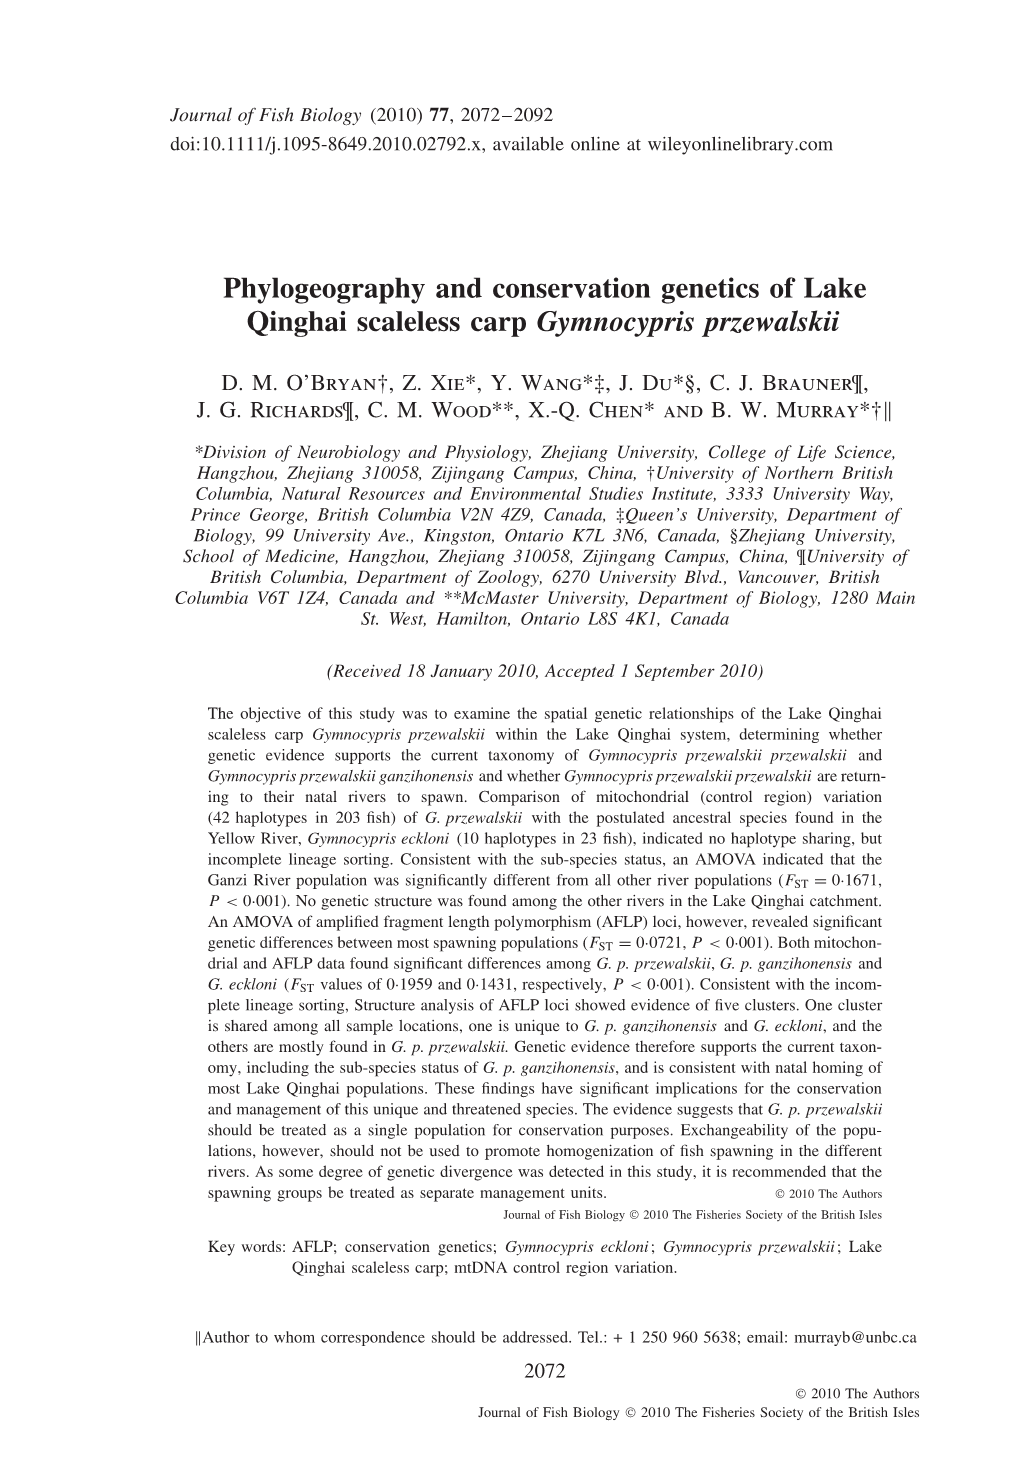 Phylogeography and Conservation Genetics of Lake Qinghai Scaleless Carp Gymnocypris Przewalskii